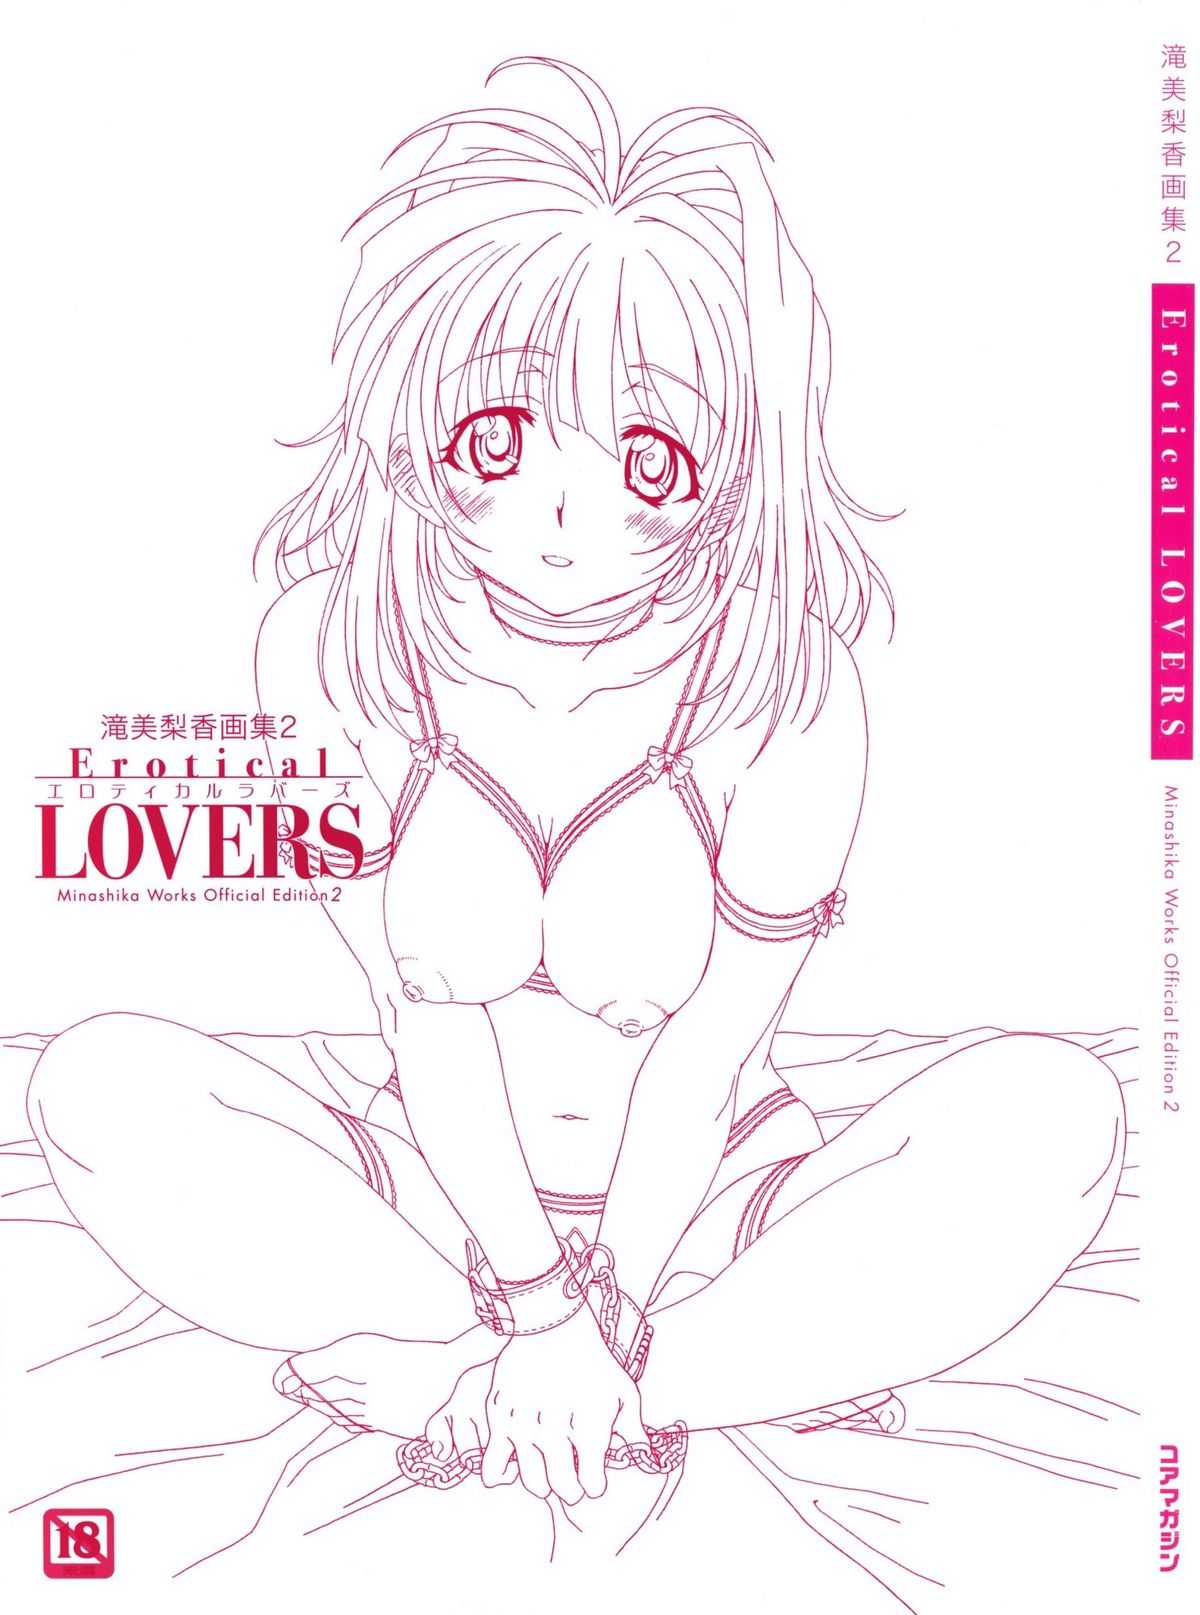 Erotical Lovers by Minashika 